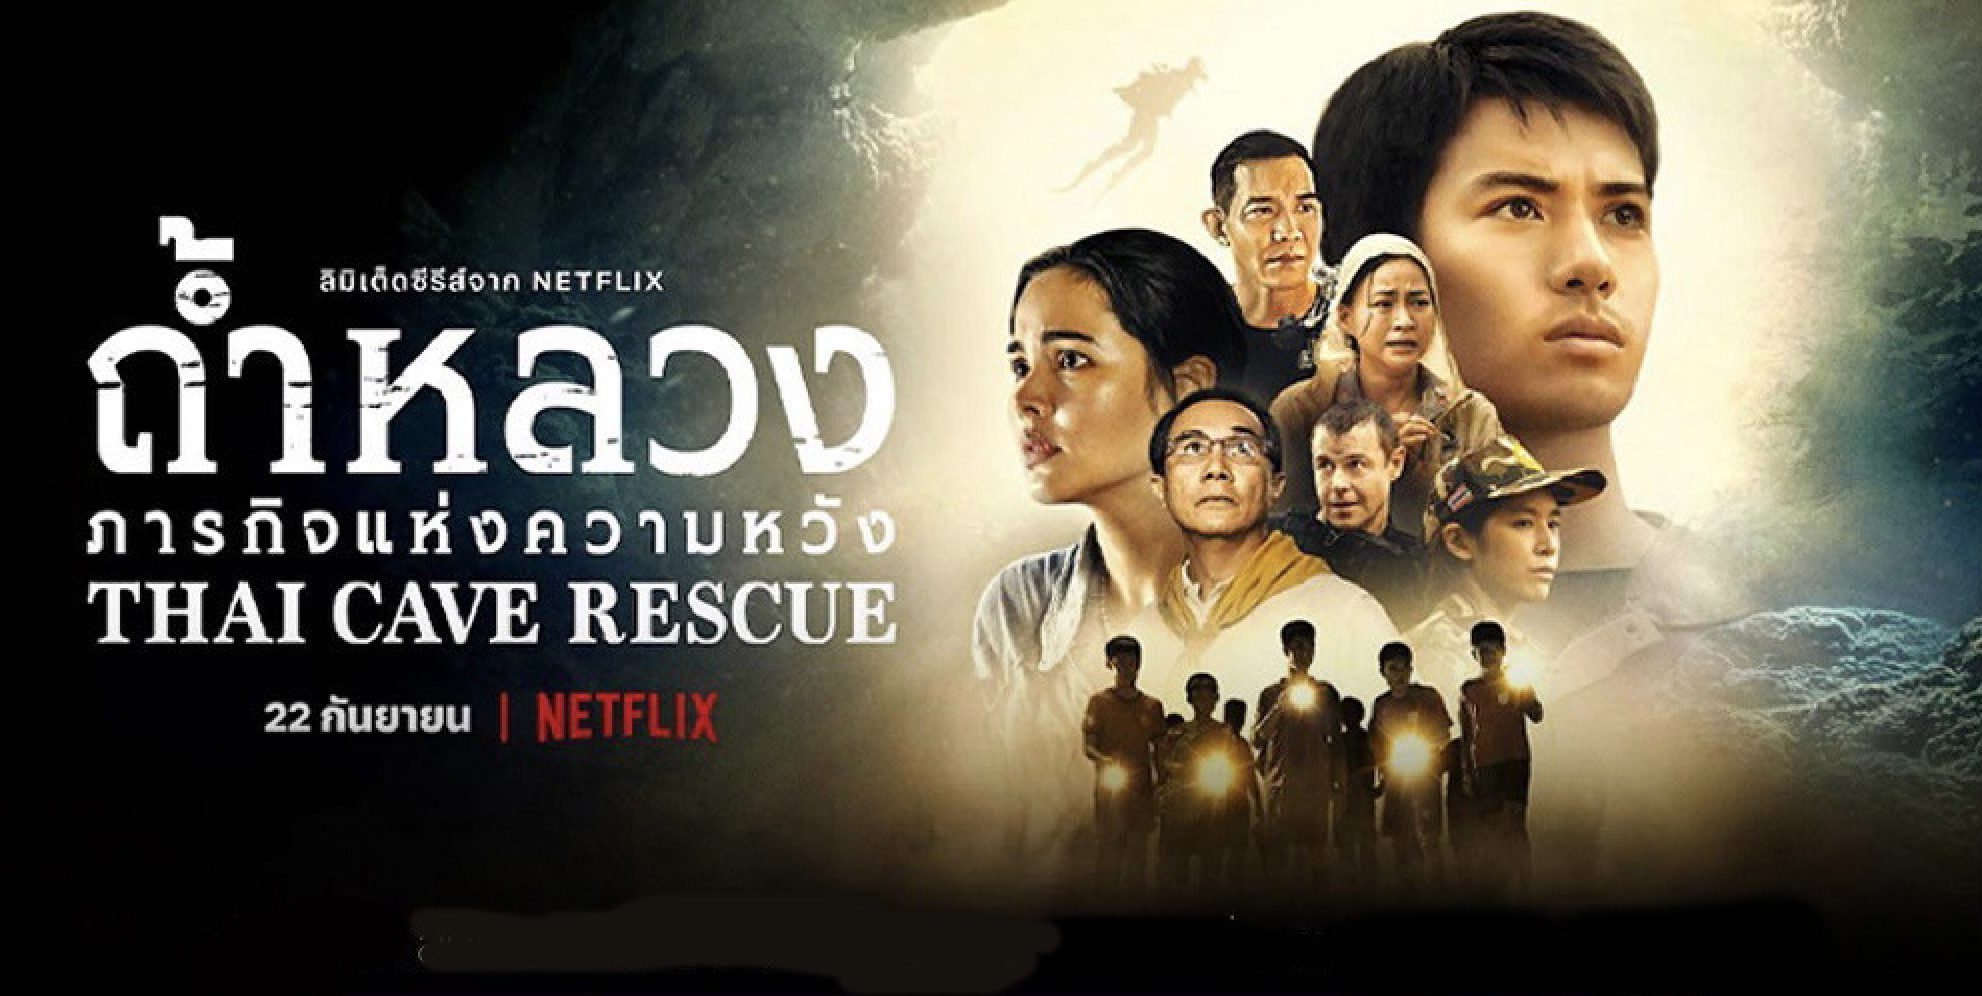 Netflix series 《ถ้ำหลวง: ภารกิจแห่งความหวัง Thai Cave Rescue泰國洞穴救援事件簿》帶你感受驚心動魄的18天 封面照片